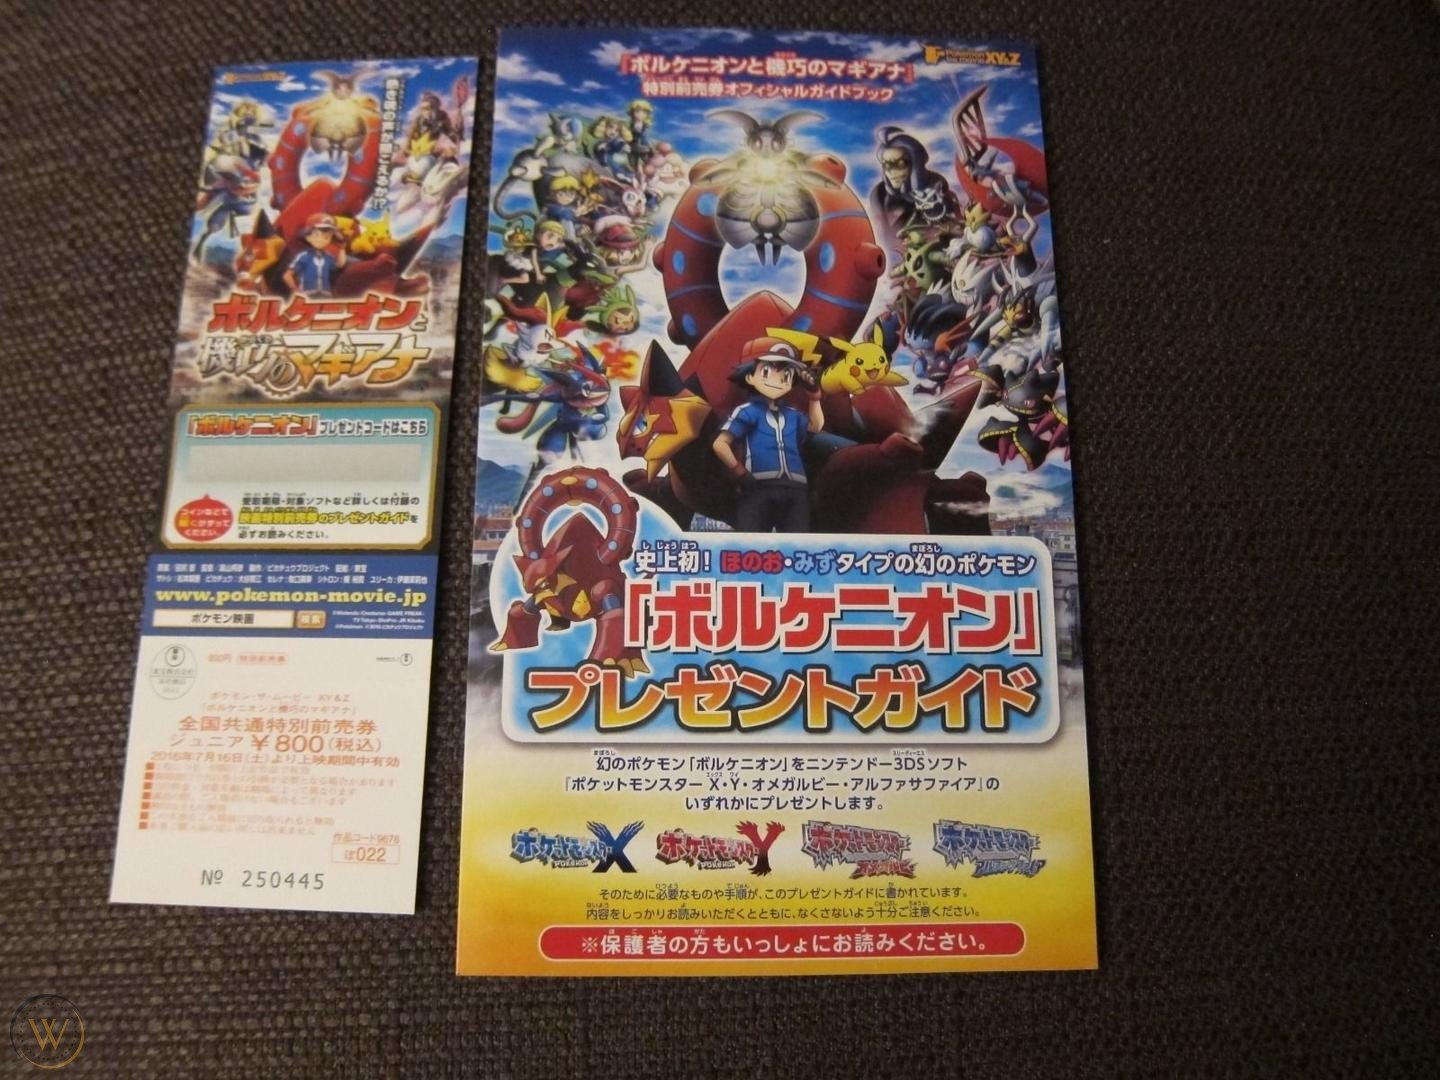 0161 Xyoras ネーベル Volcanion Jpn Japanese Project Pokemon Forums